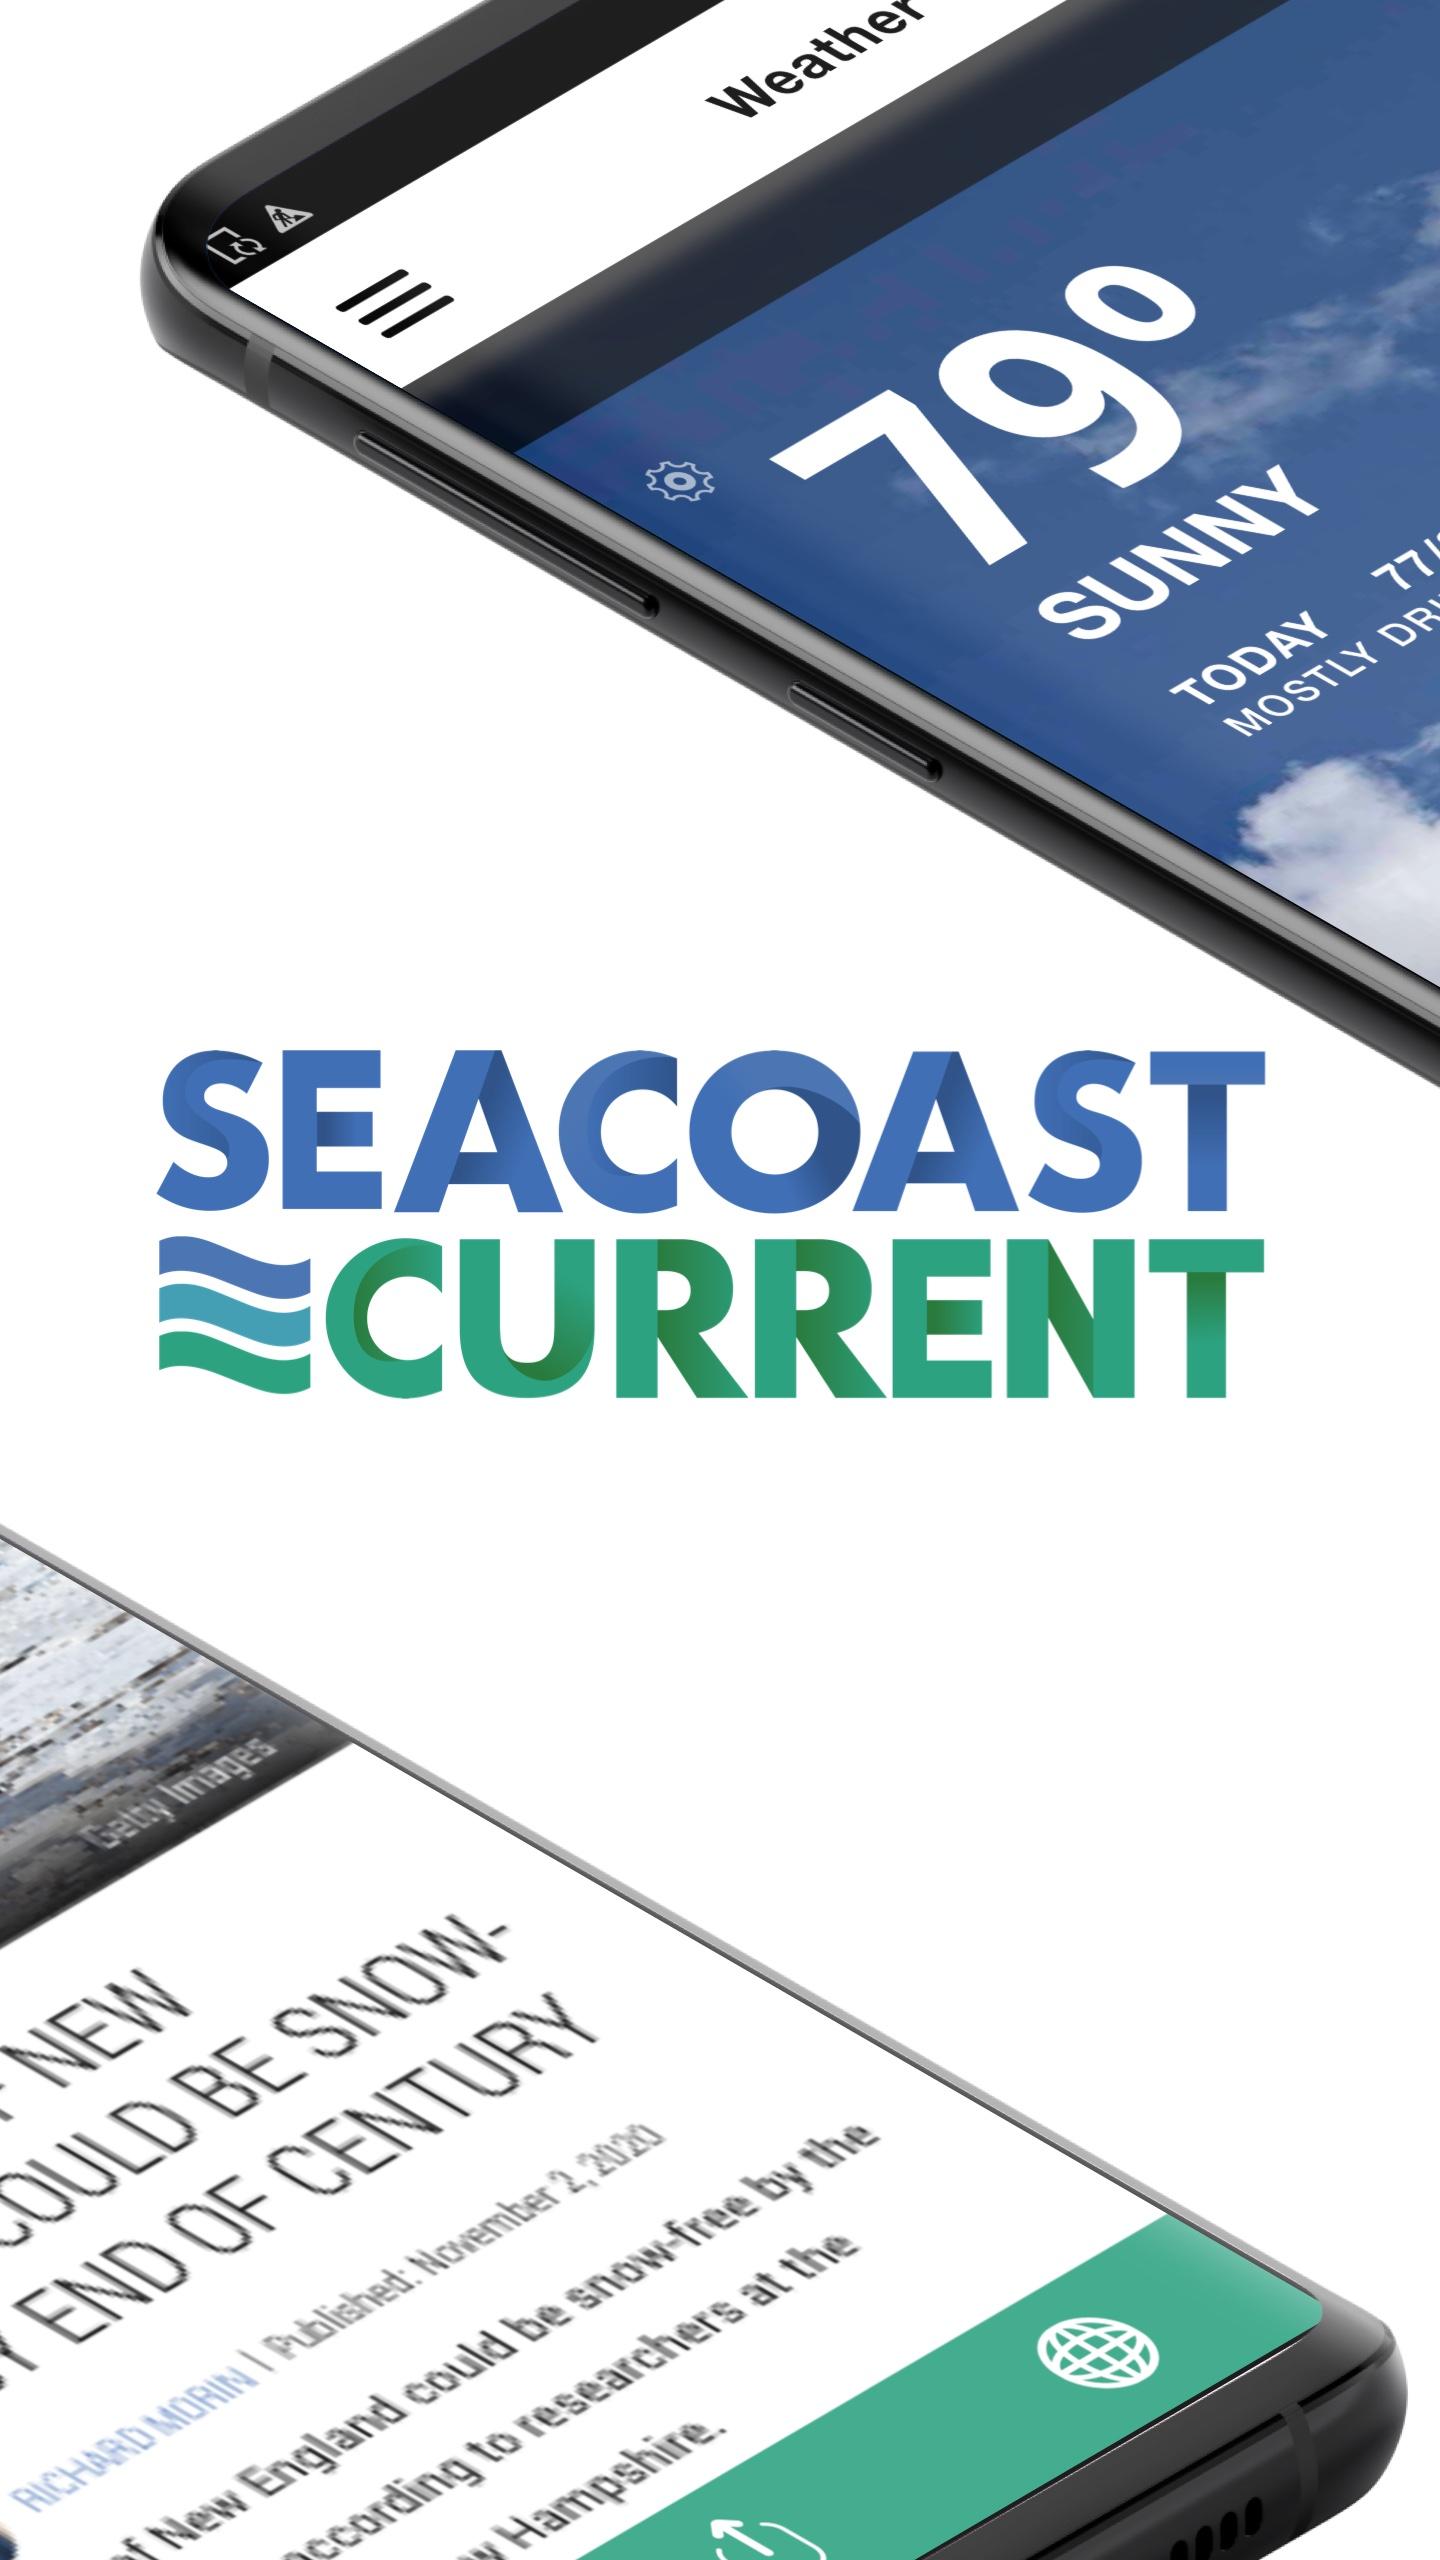 Seacoast Current Local News for the Seacoast 1.0.5 Screenshot 2